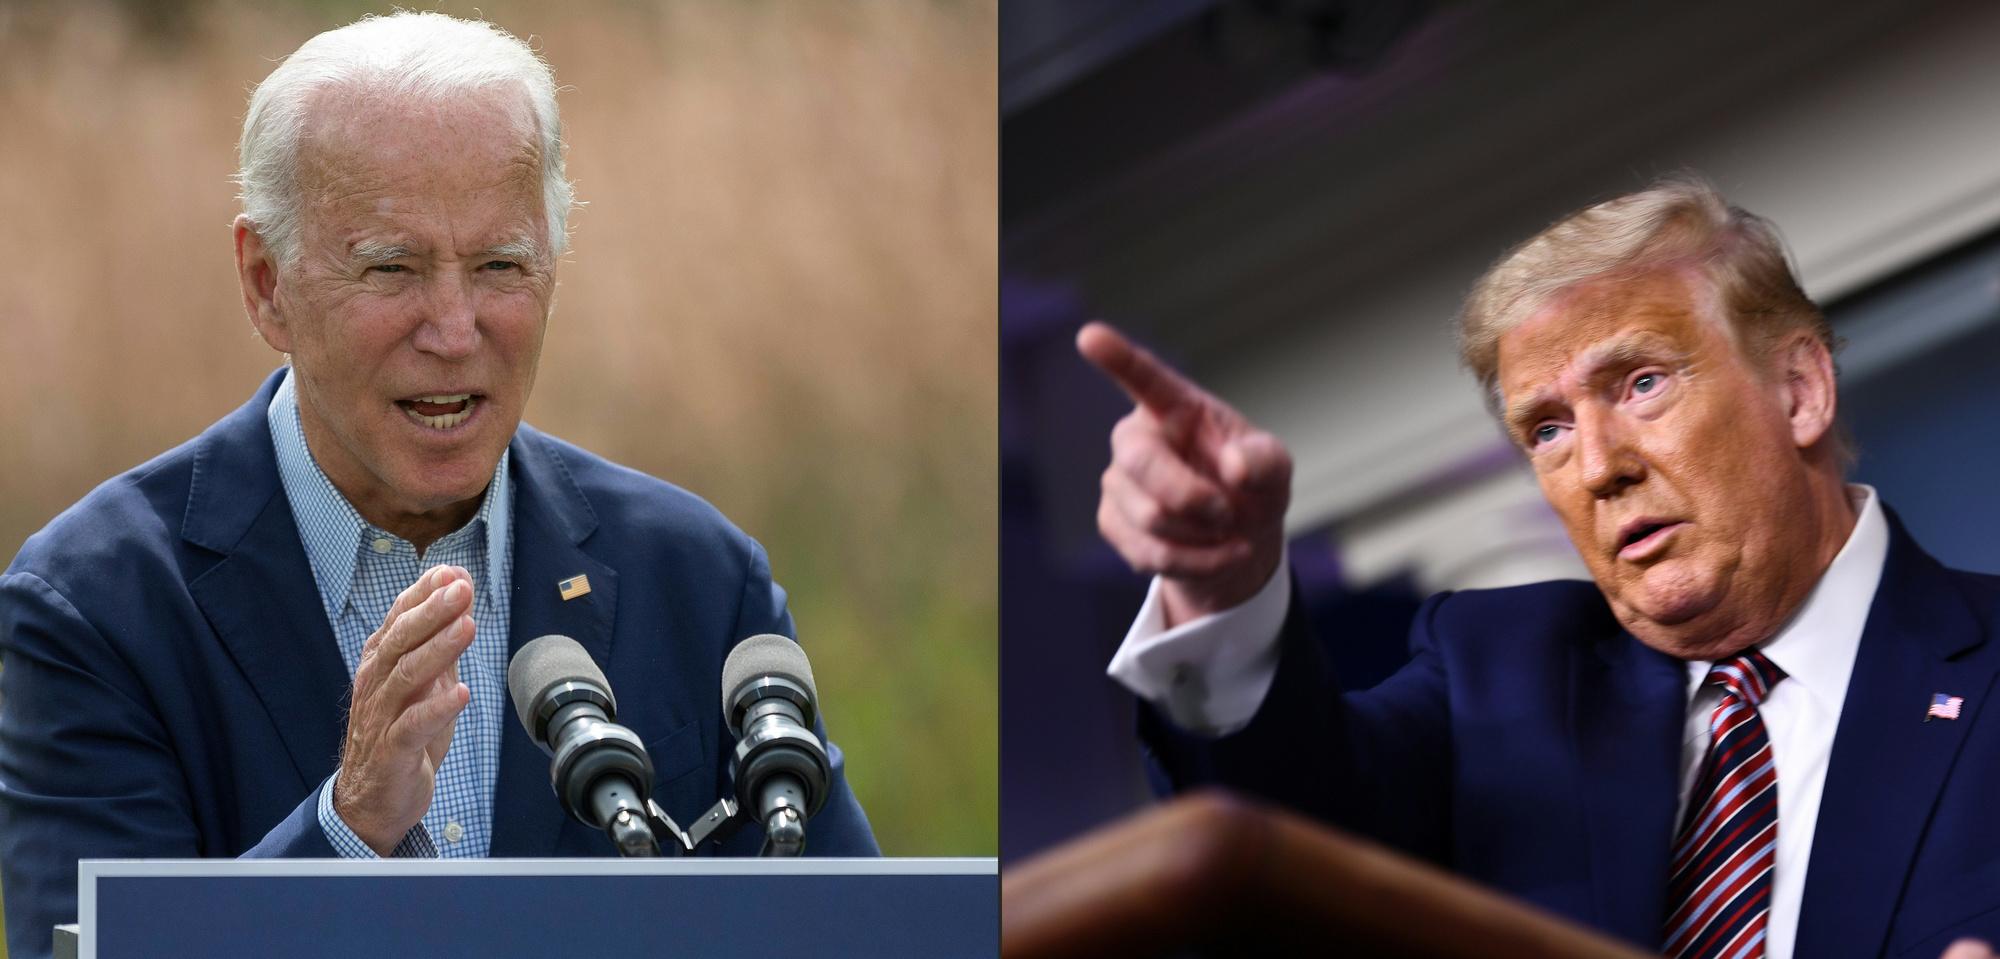 Donald Trump vs Joe Biden, place au débat